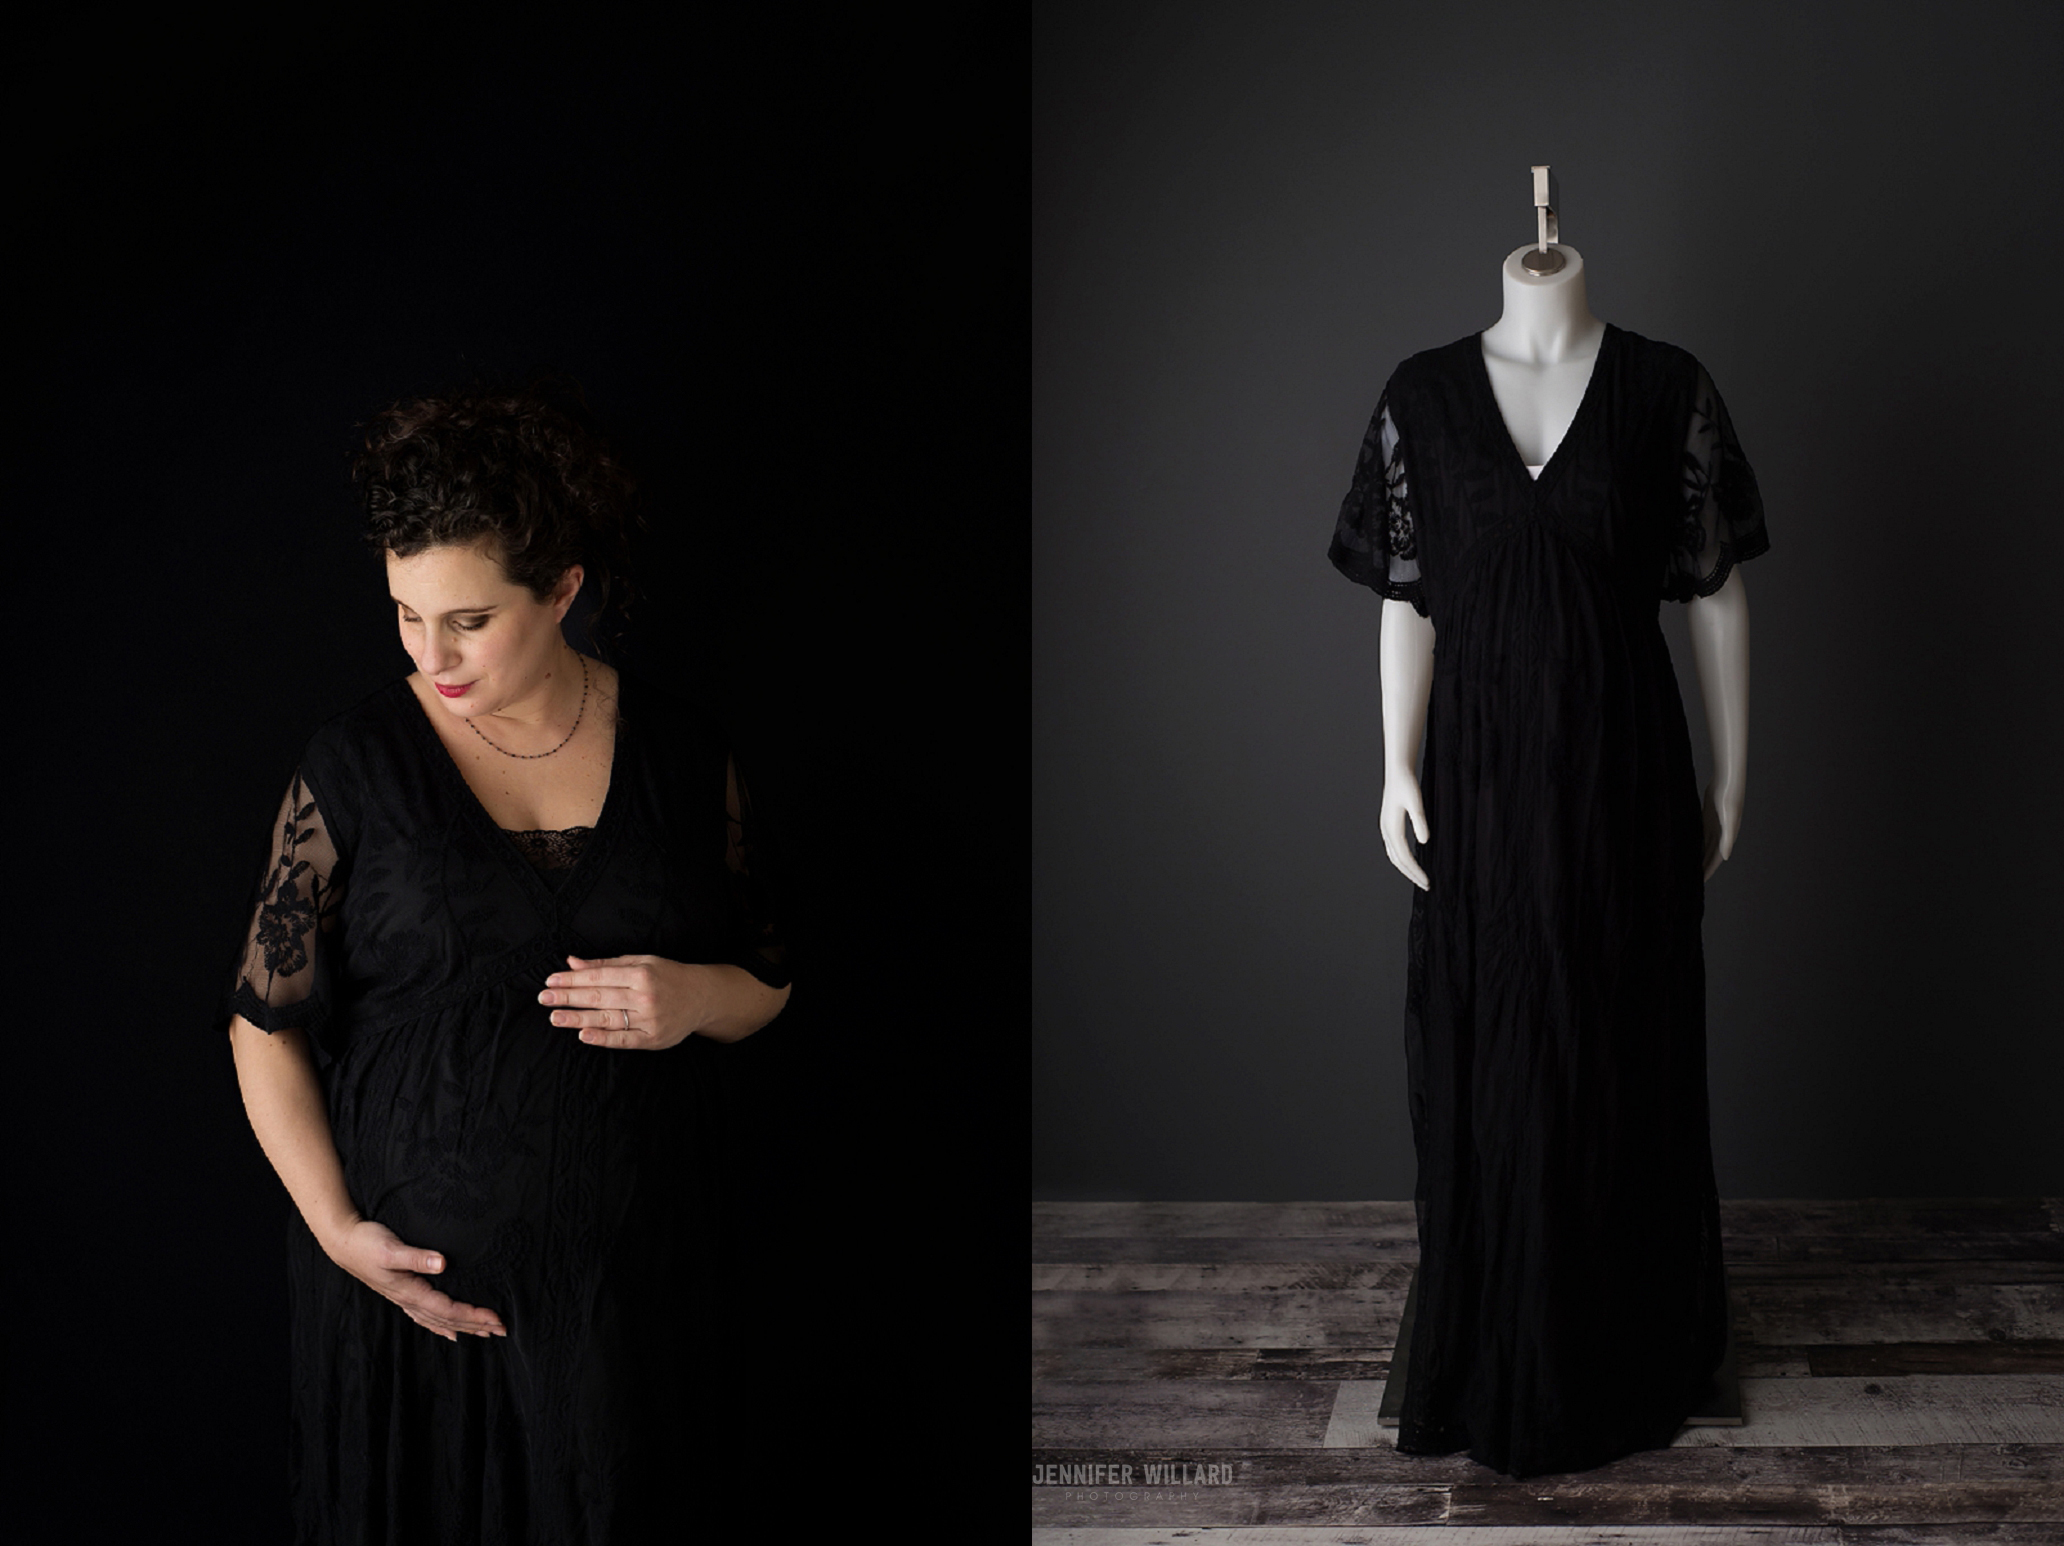 black lace maternity dress